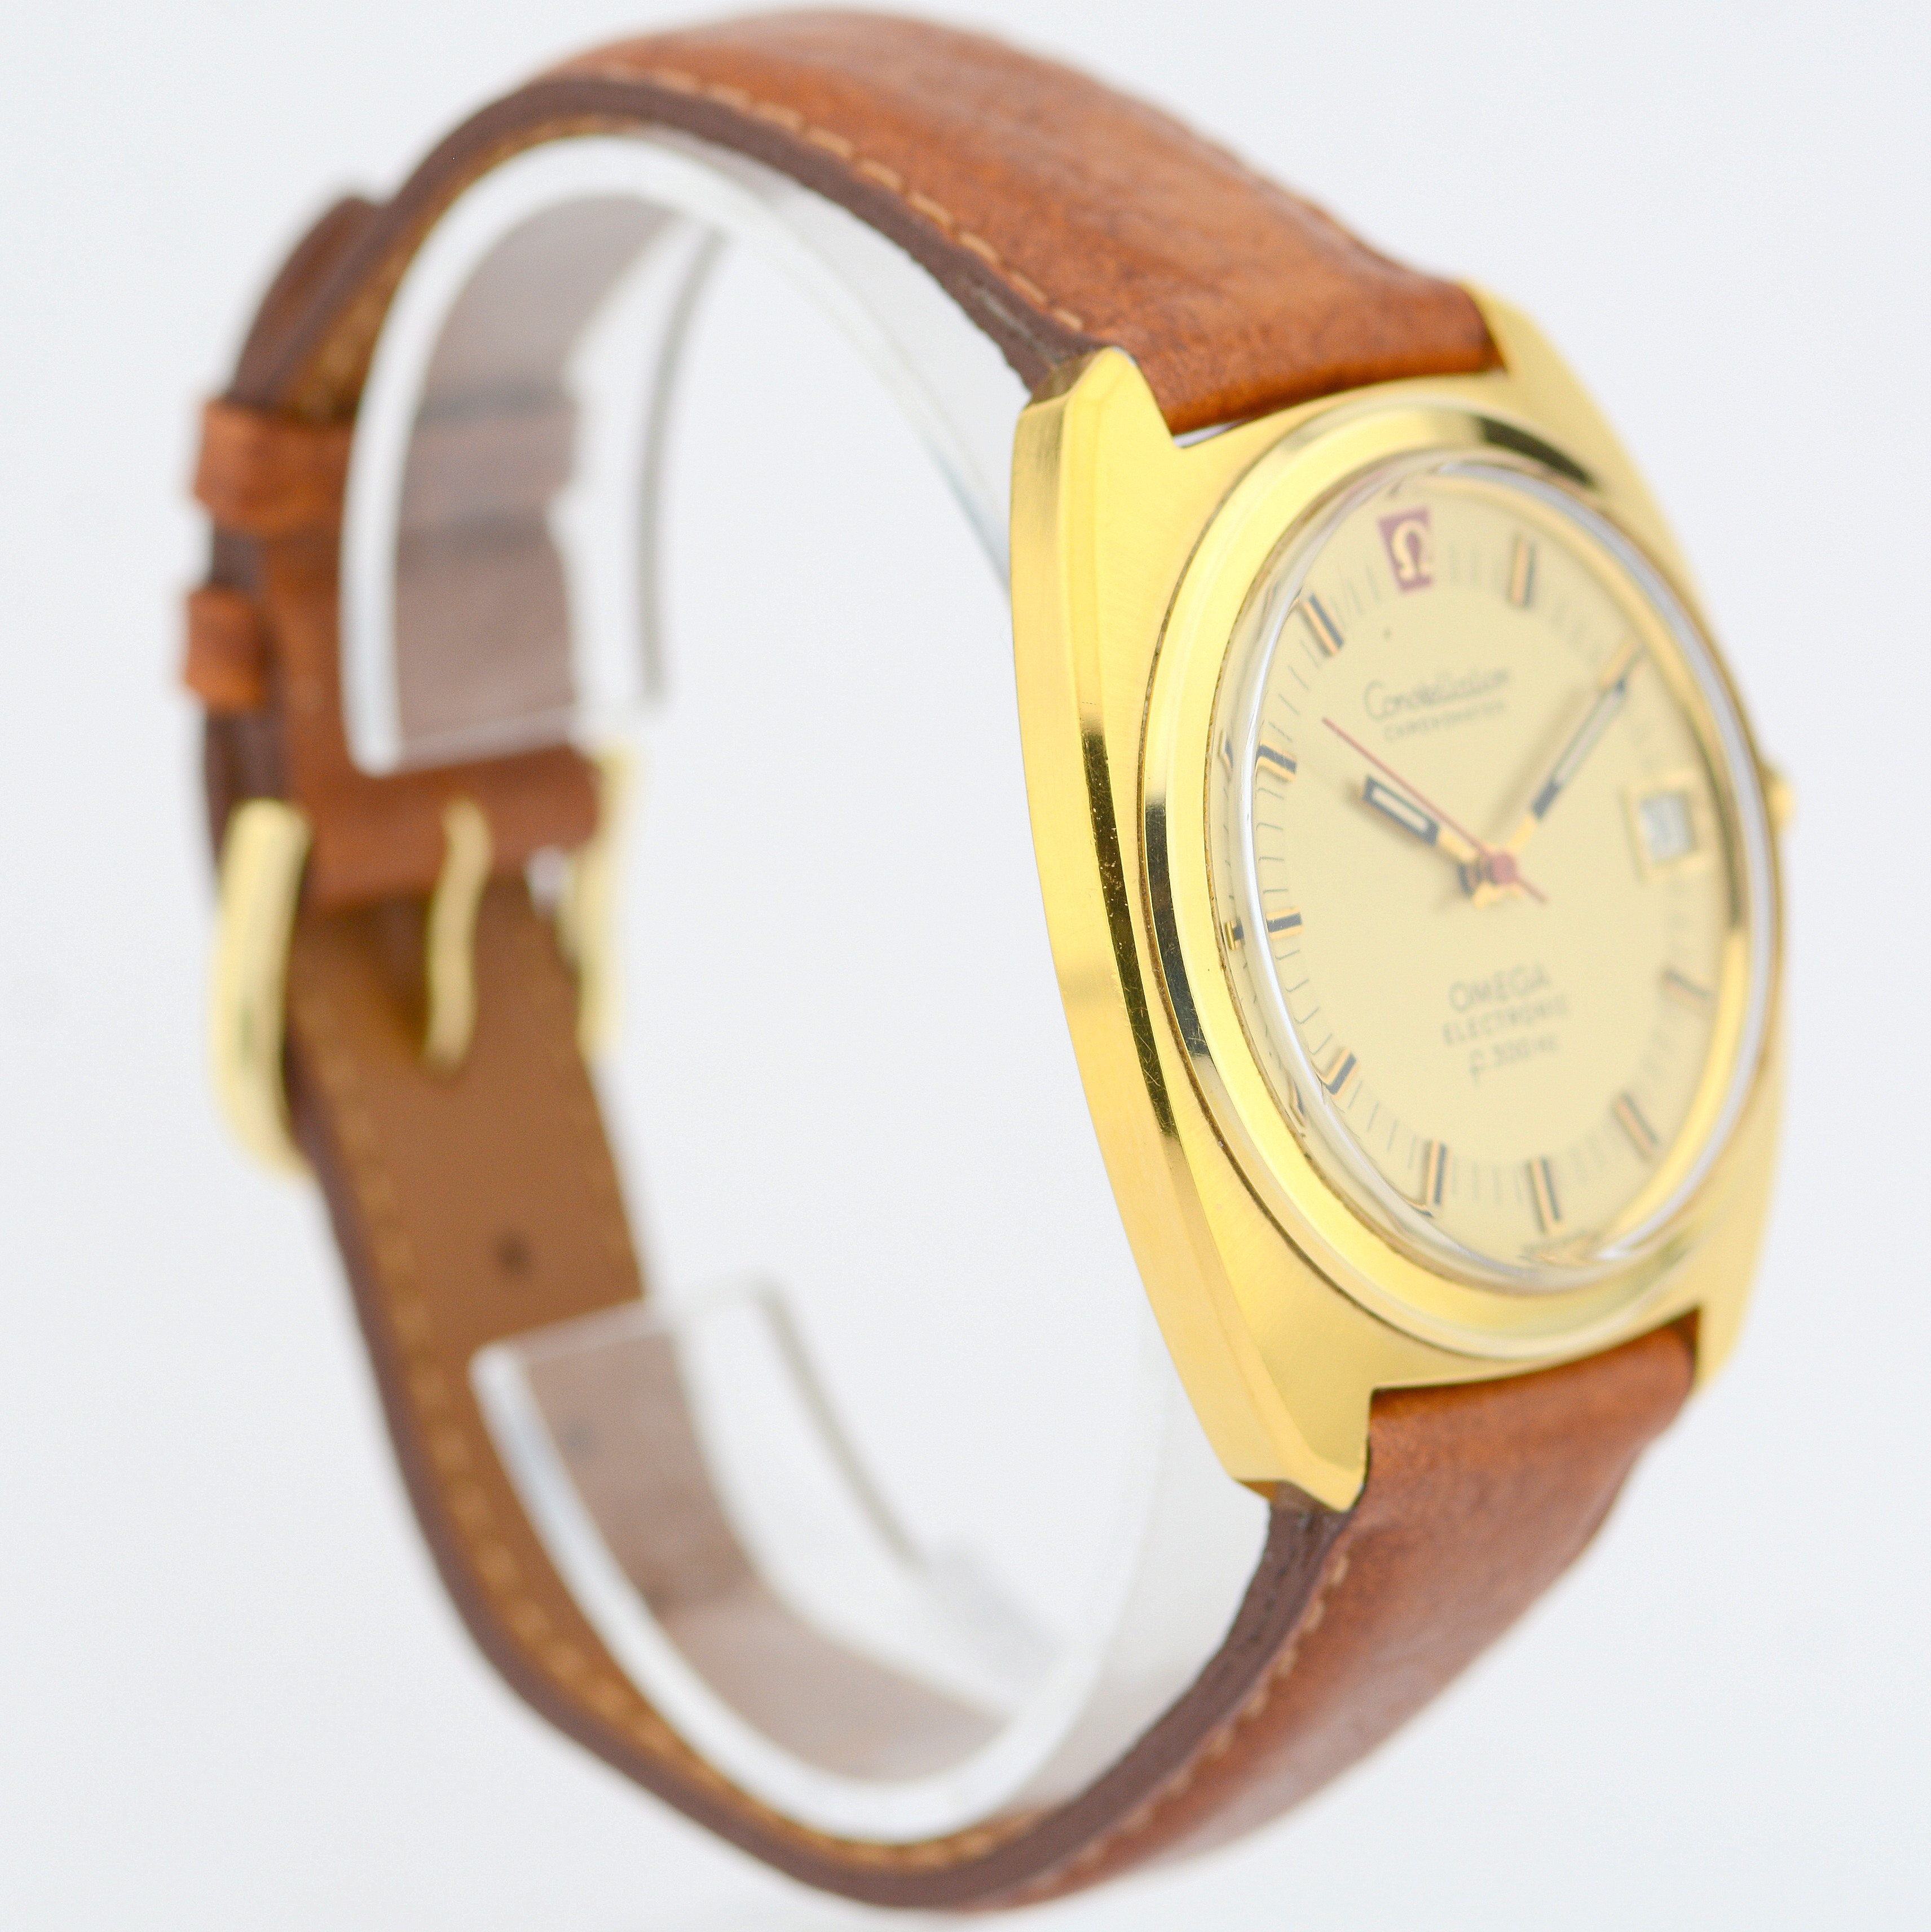 Omega / Constellation Chronometer Electronic f300Hz - Gentlmen's Gold/Steel Wrist Watch - Image 4 of 6